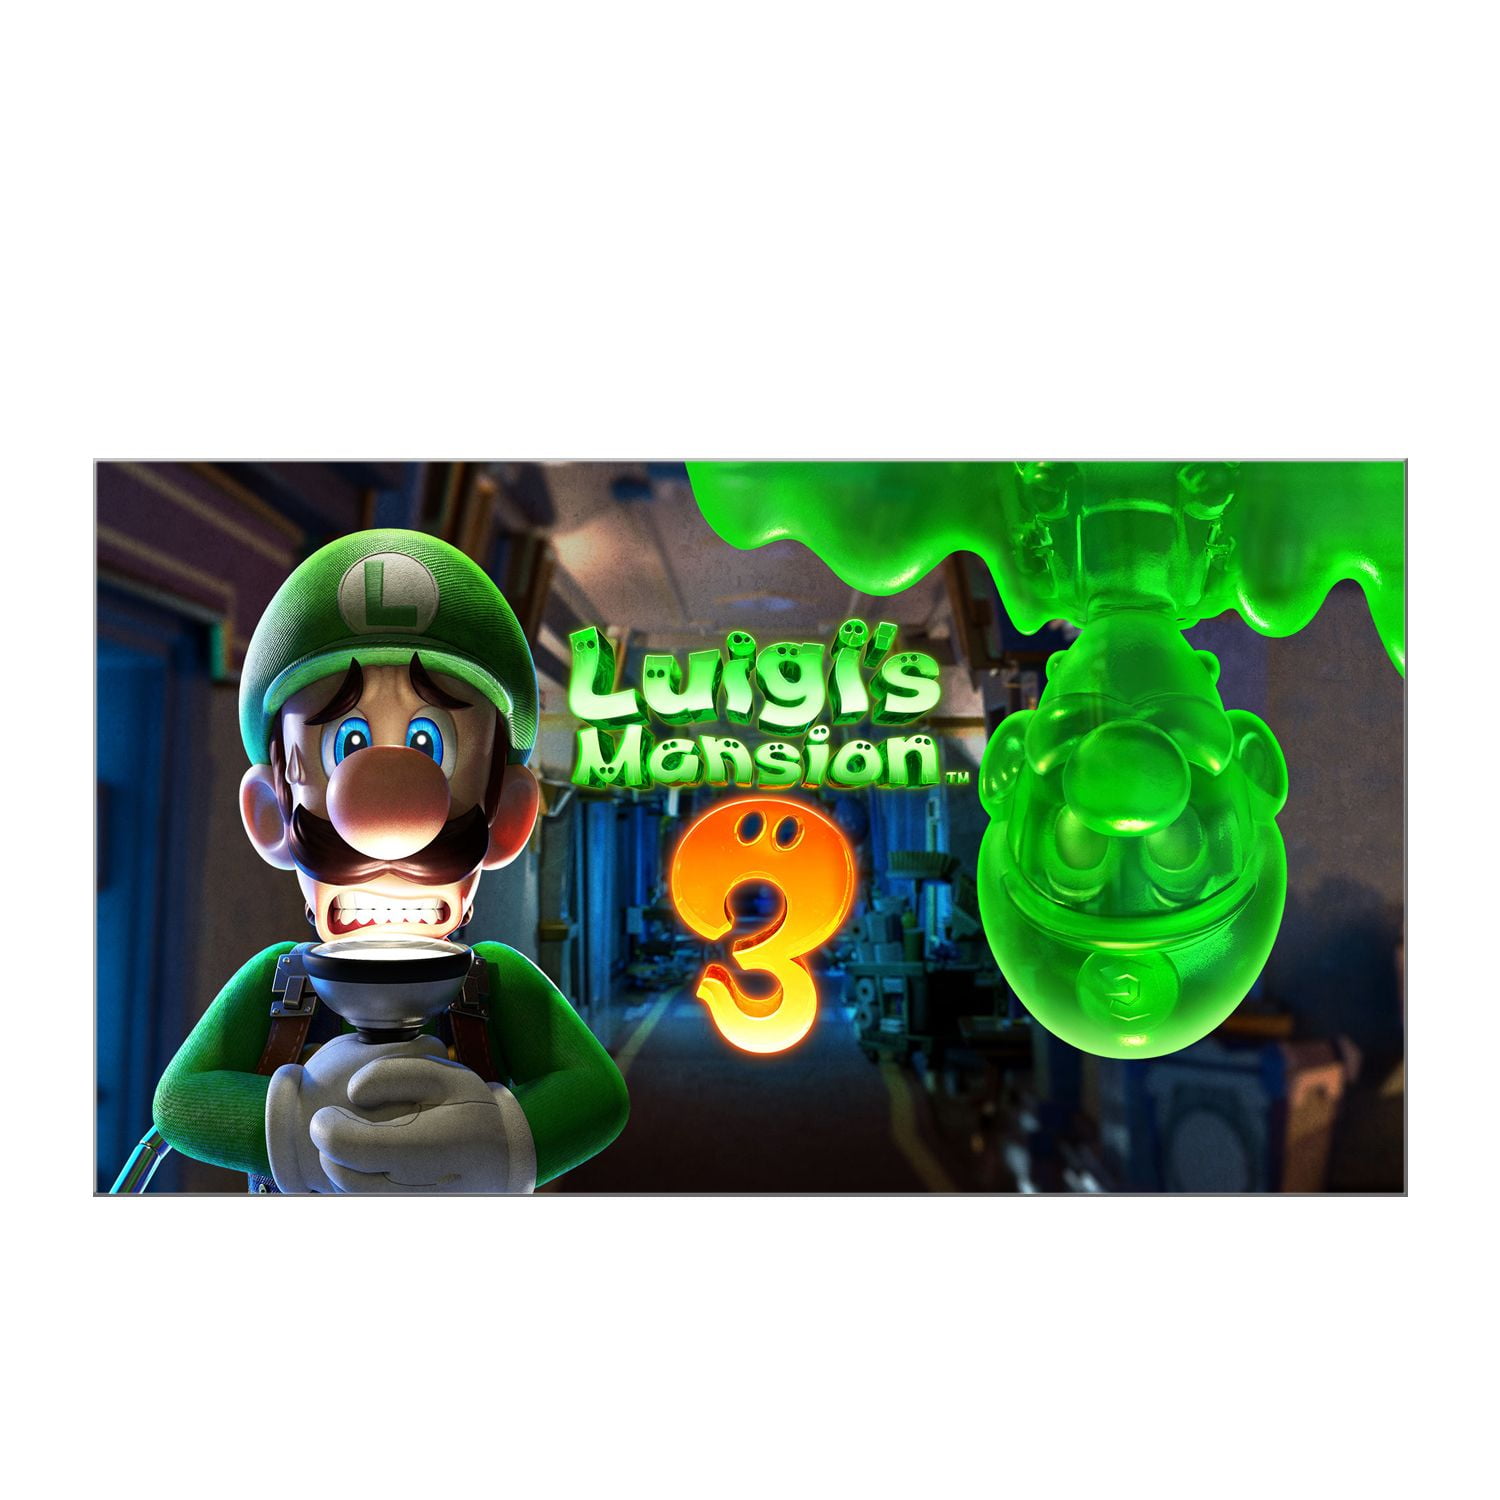 Original Box Case Replacement Nintendo Switch for Luigi's Mansion